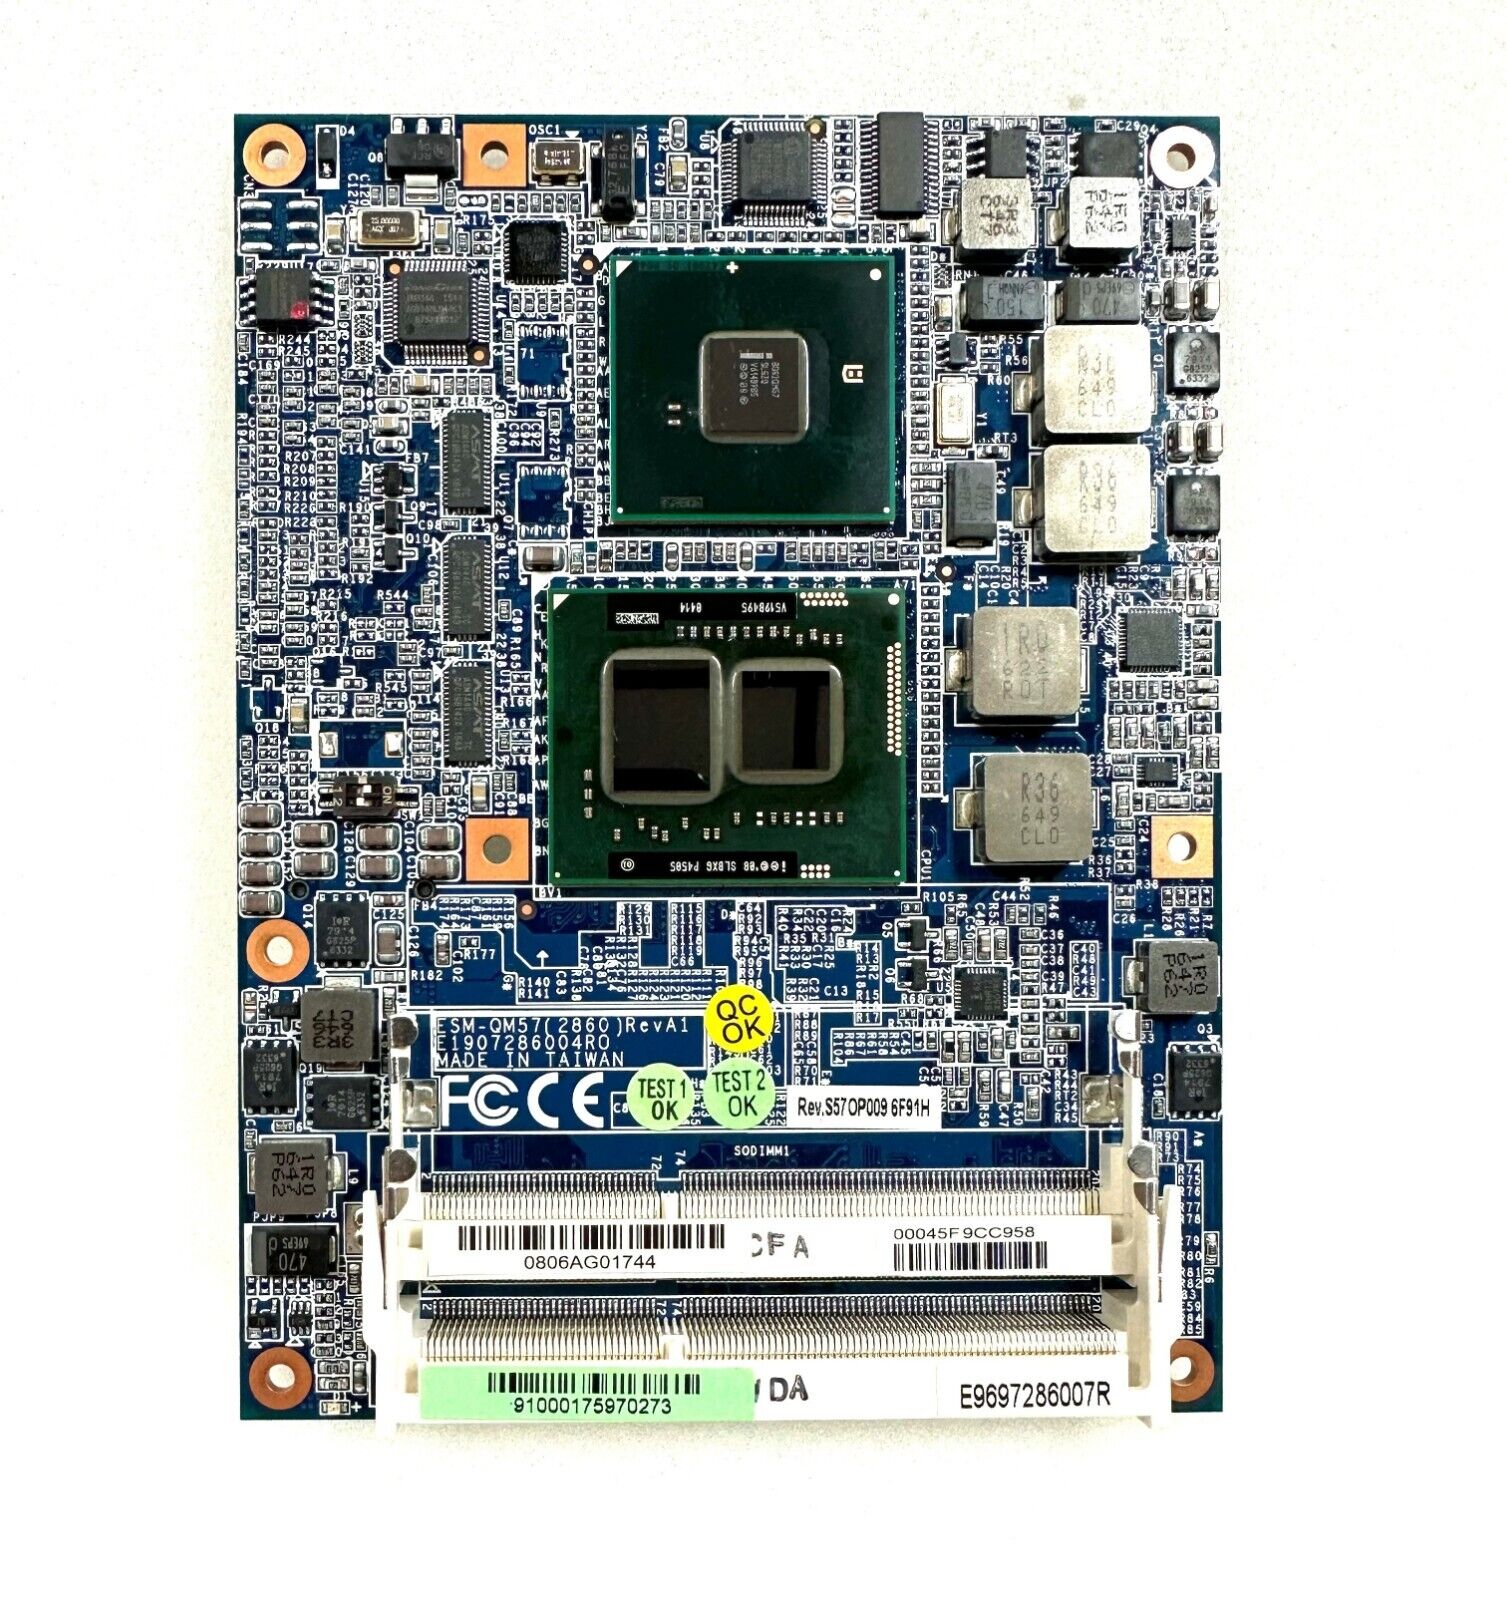 ESM-QM57(2860) REV A1 Avalue  MEDICAL all-in-one PC BOARD 1.86Ghz CELERON P4505